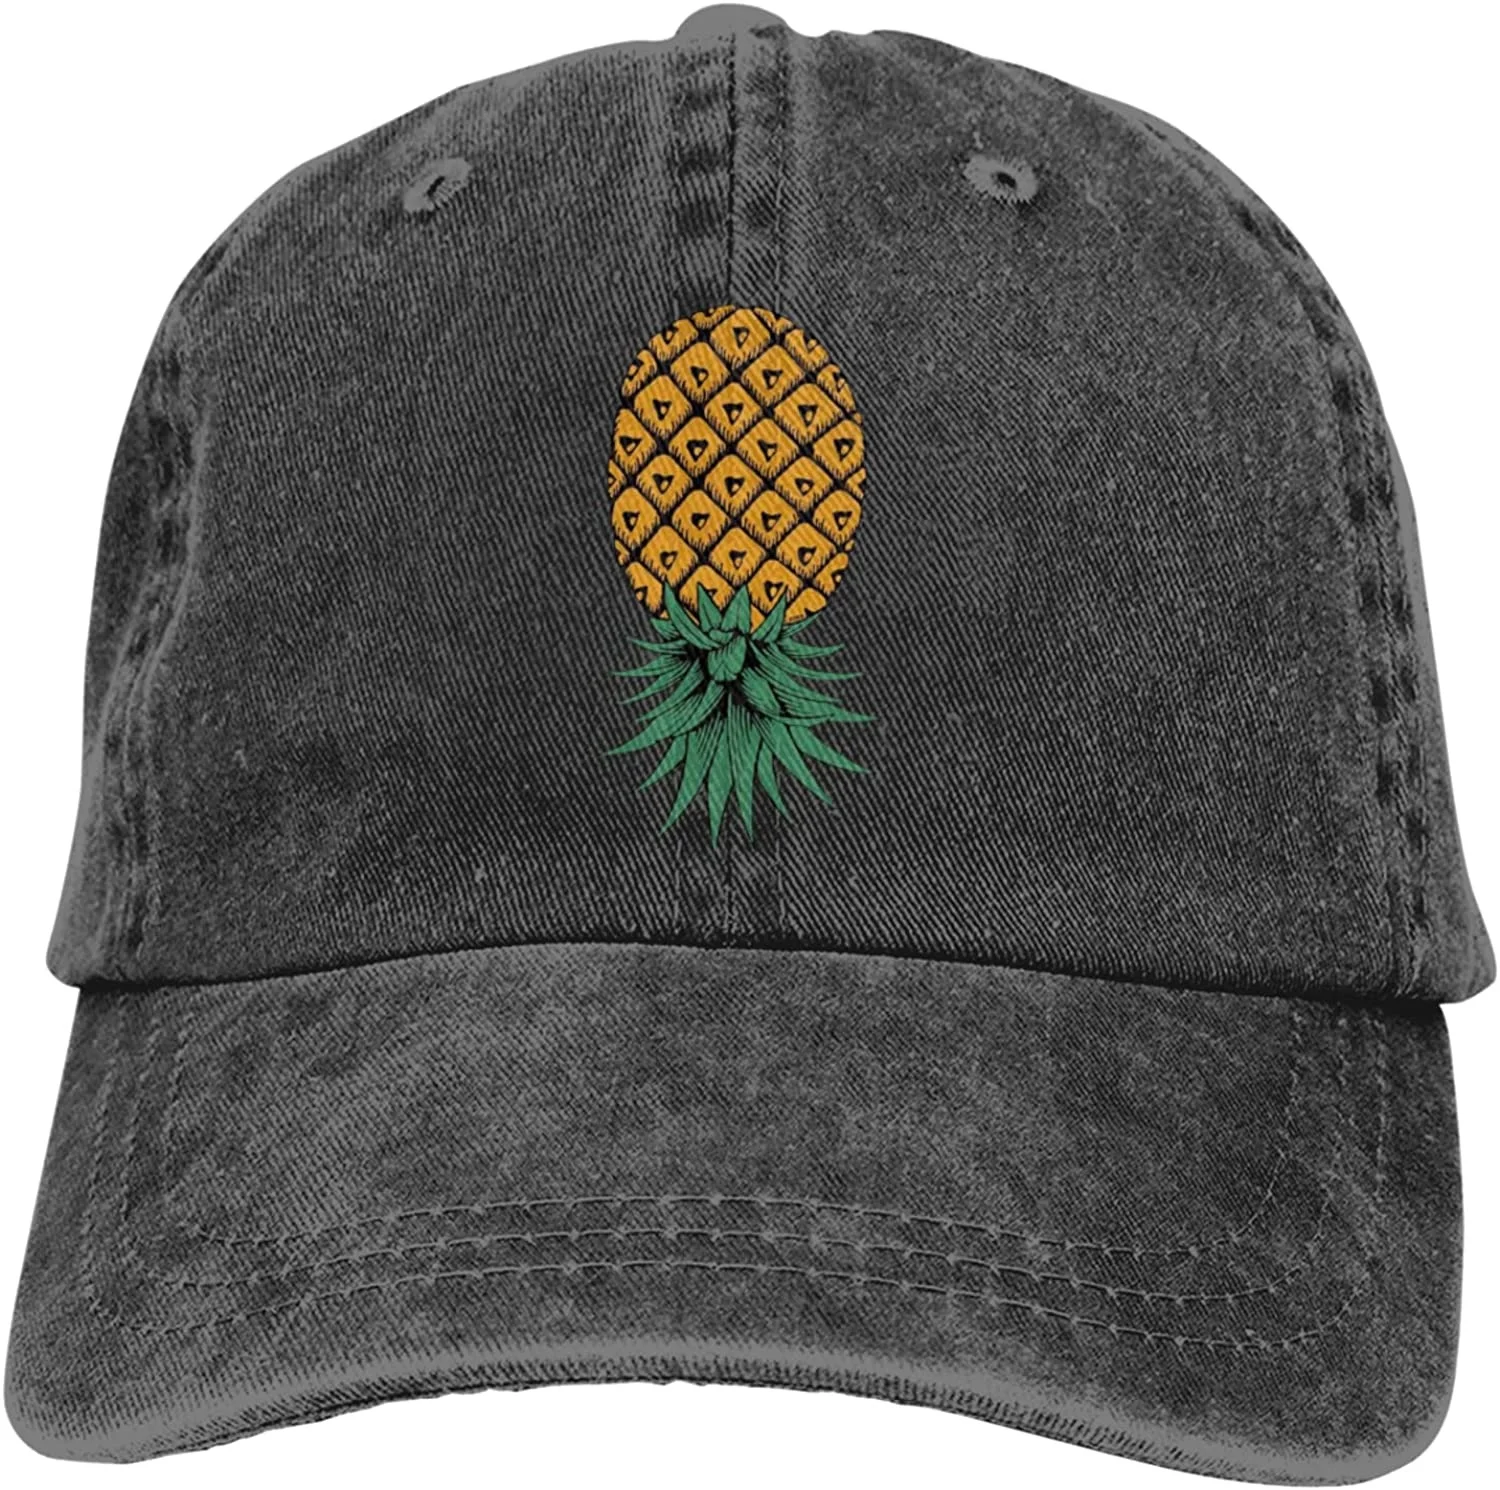 

Upside Down Pineapple Baseball Cap Funny Cowboy Hat Unisex Adult Vintage Trucker Hats Adjustable Washable